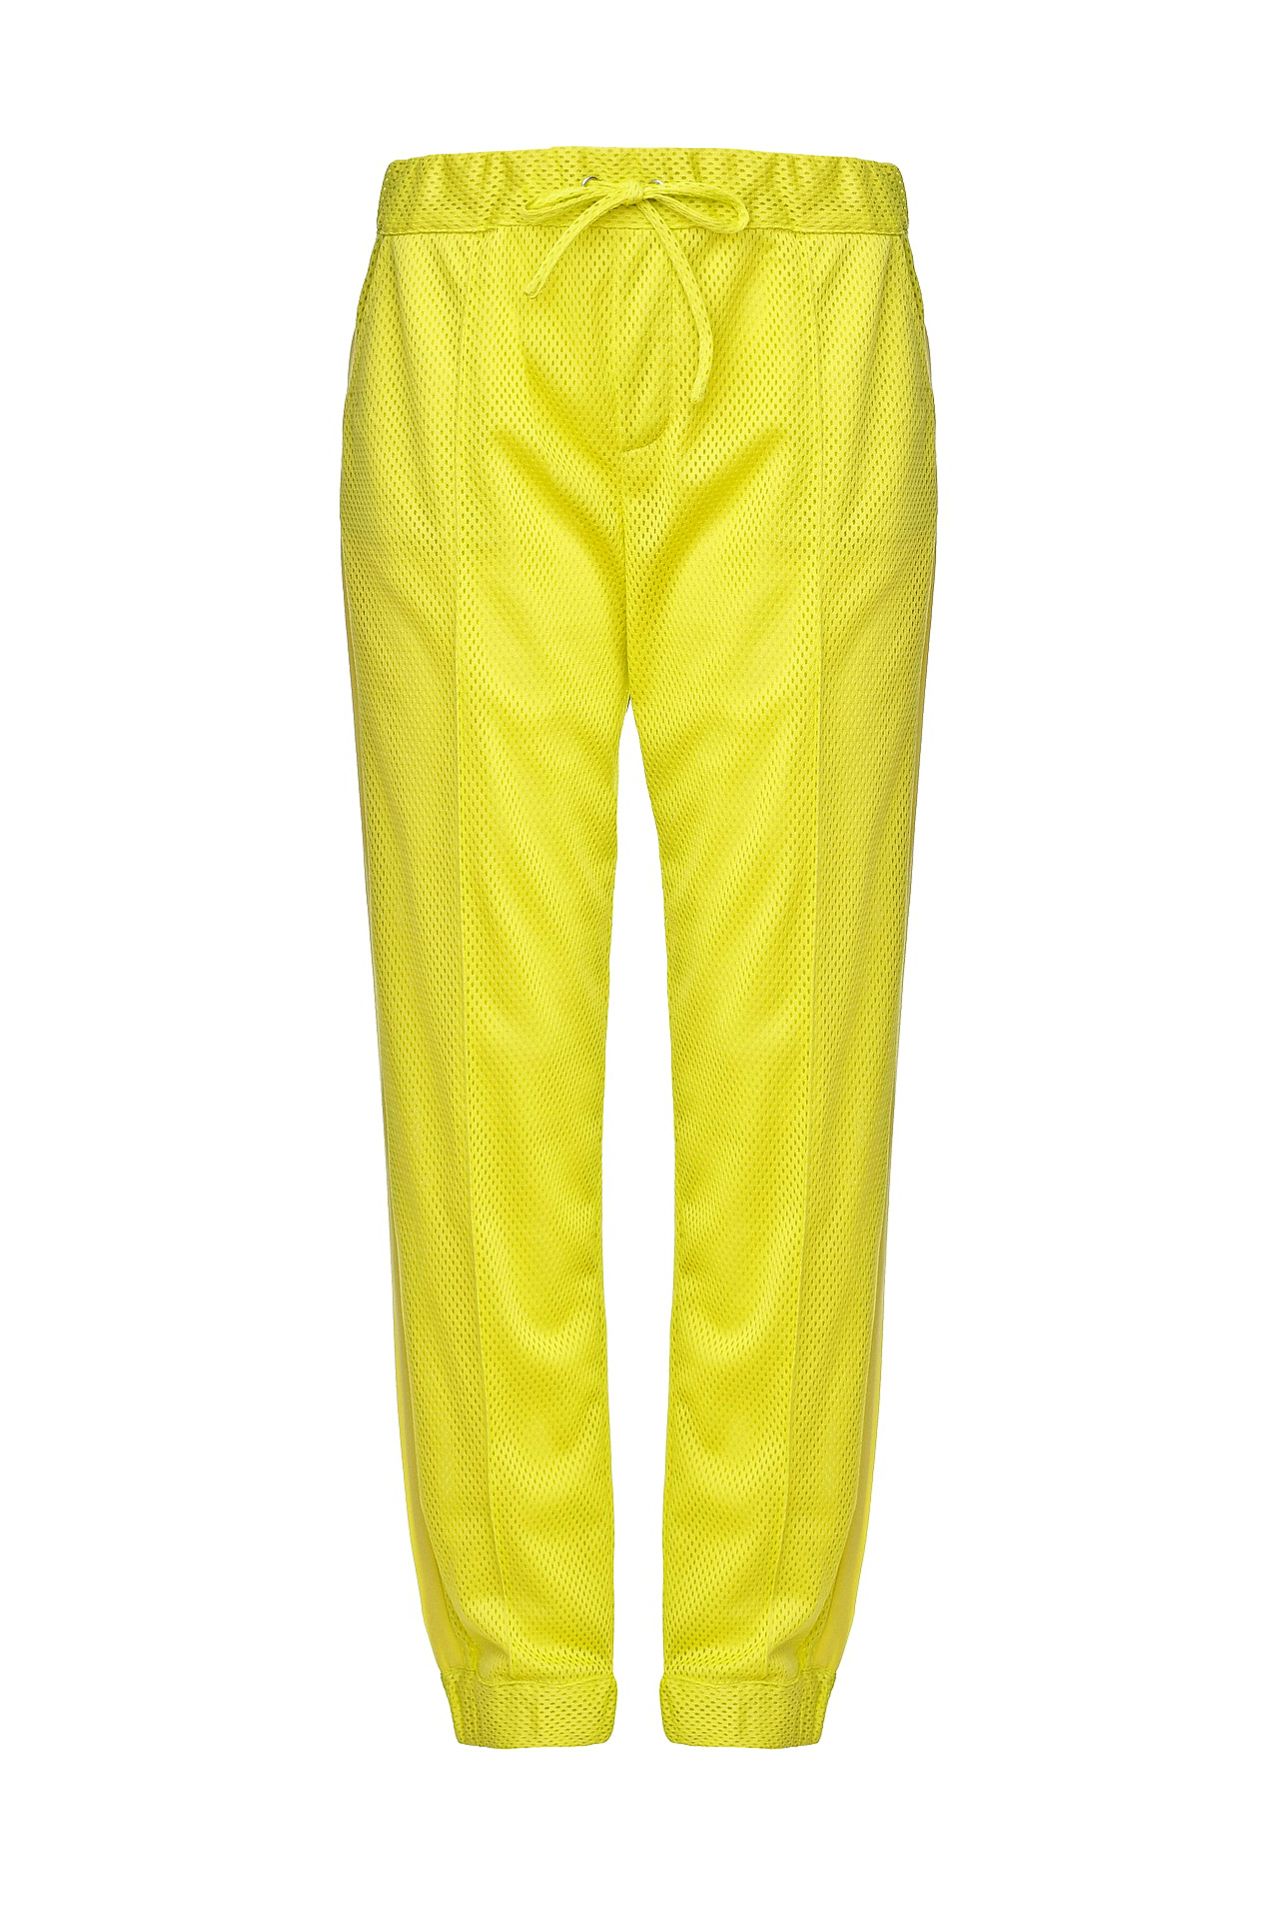 Желтые спортивные штаны женские